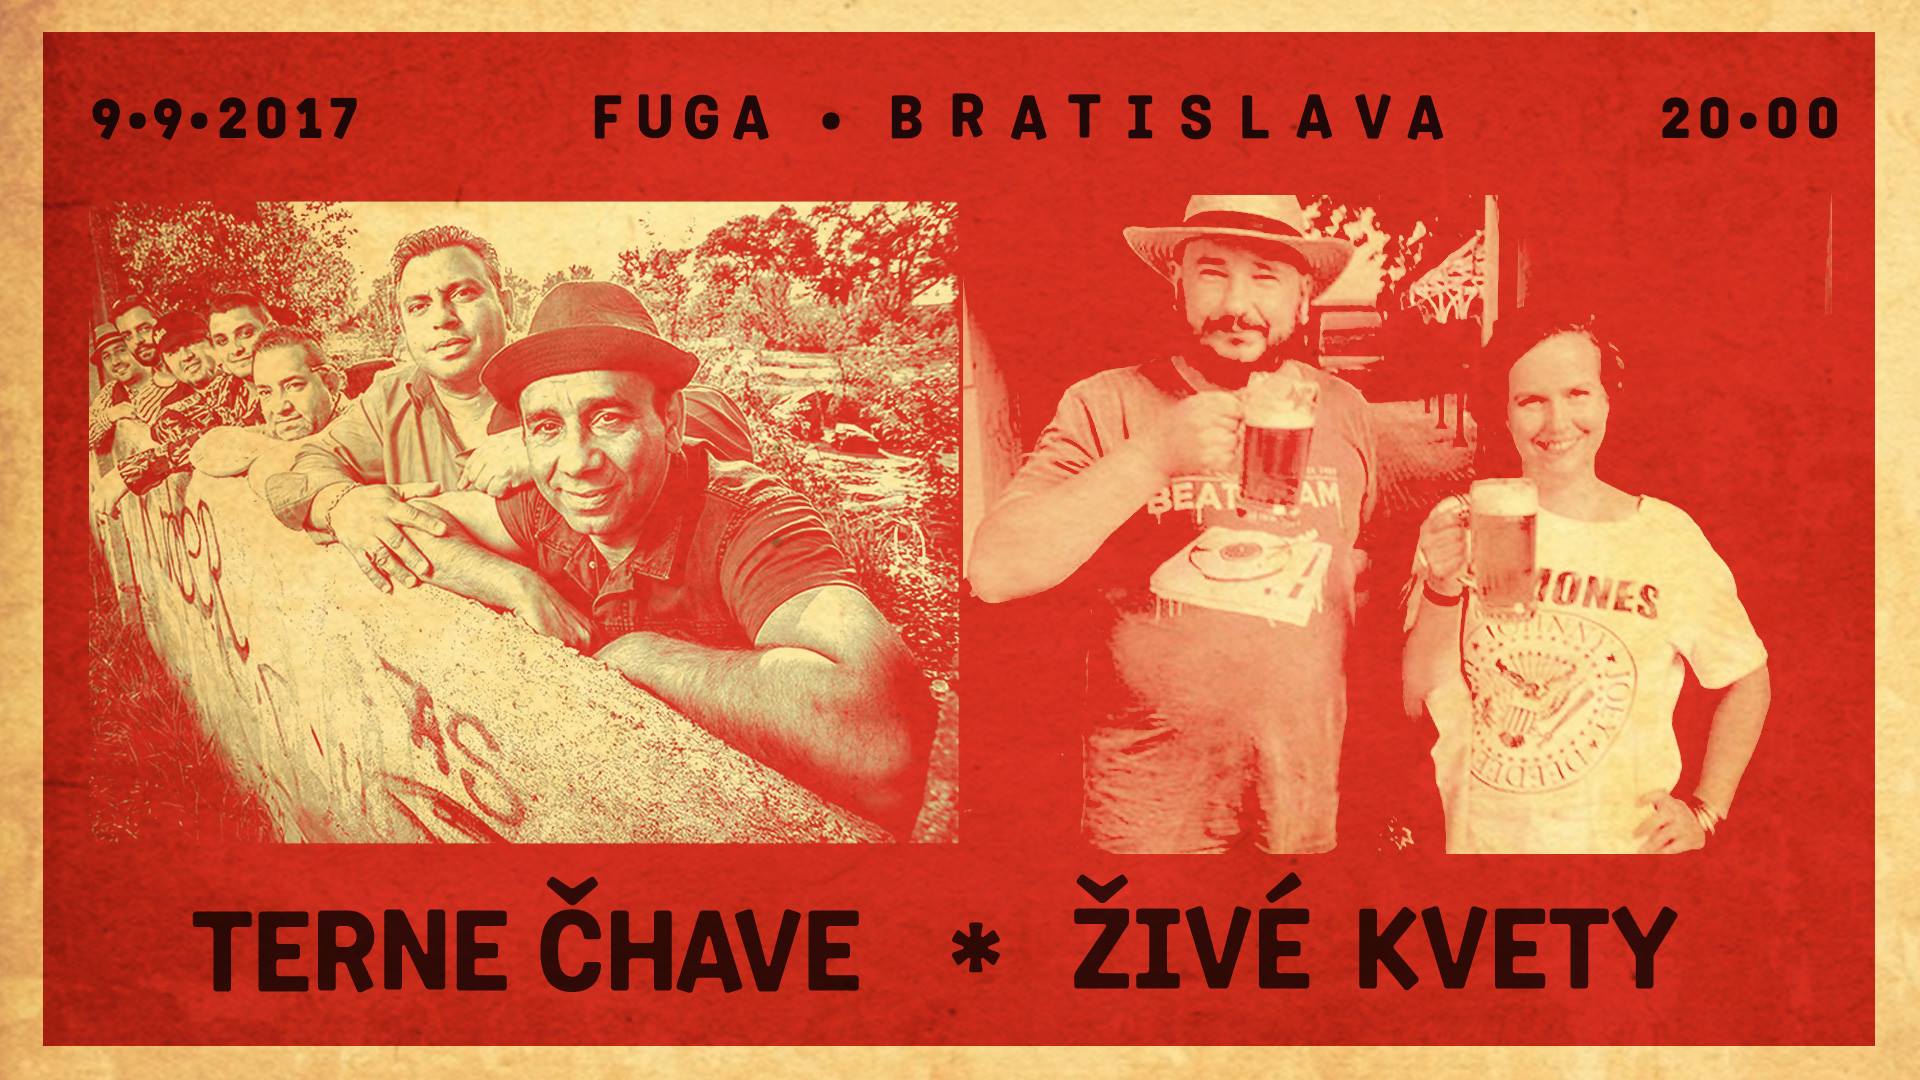 Živé kvety + Terne Čhave: sobota 09.09.2017, Bratislava, Fuga, 20:00